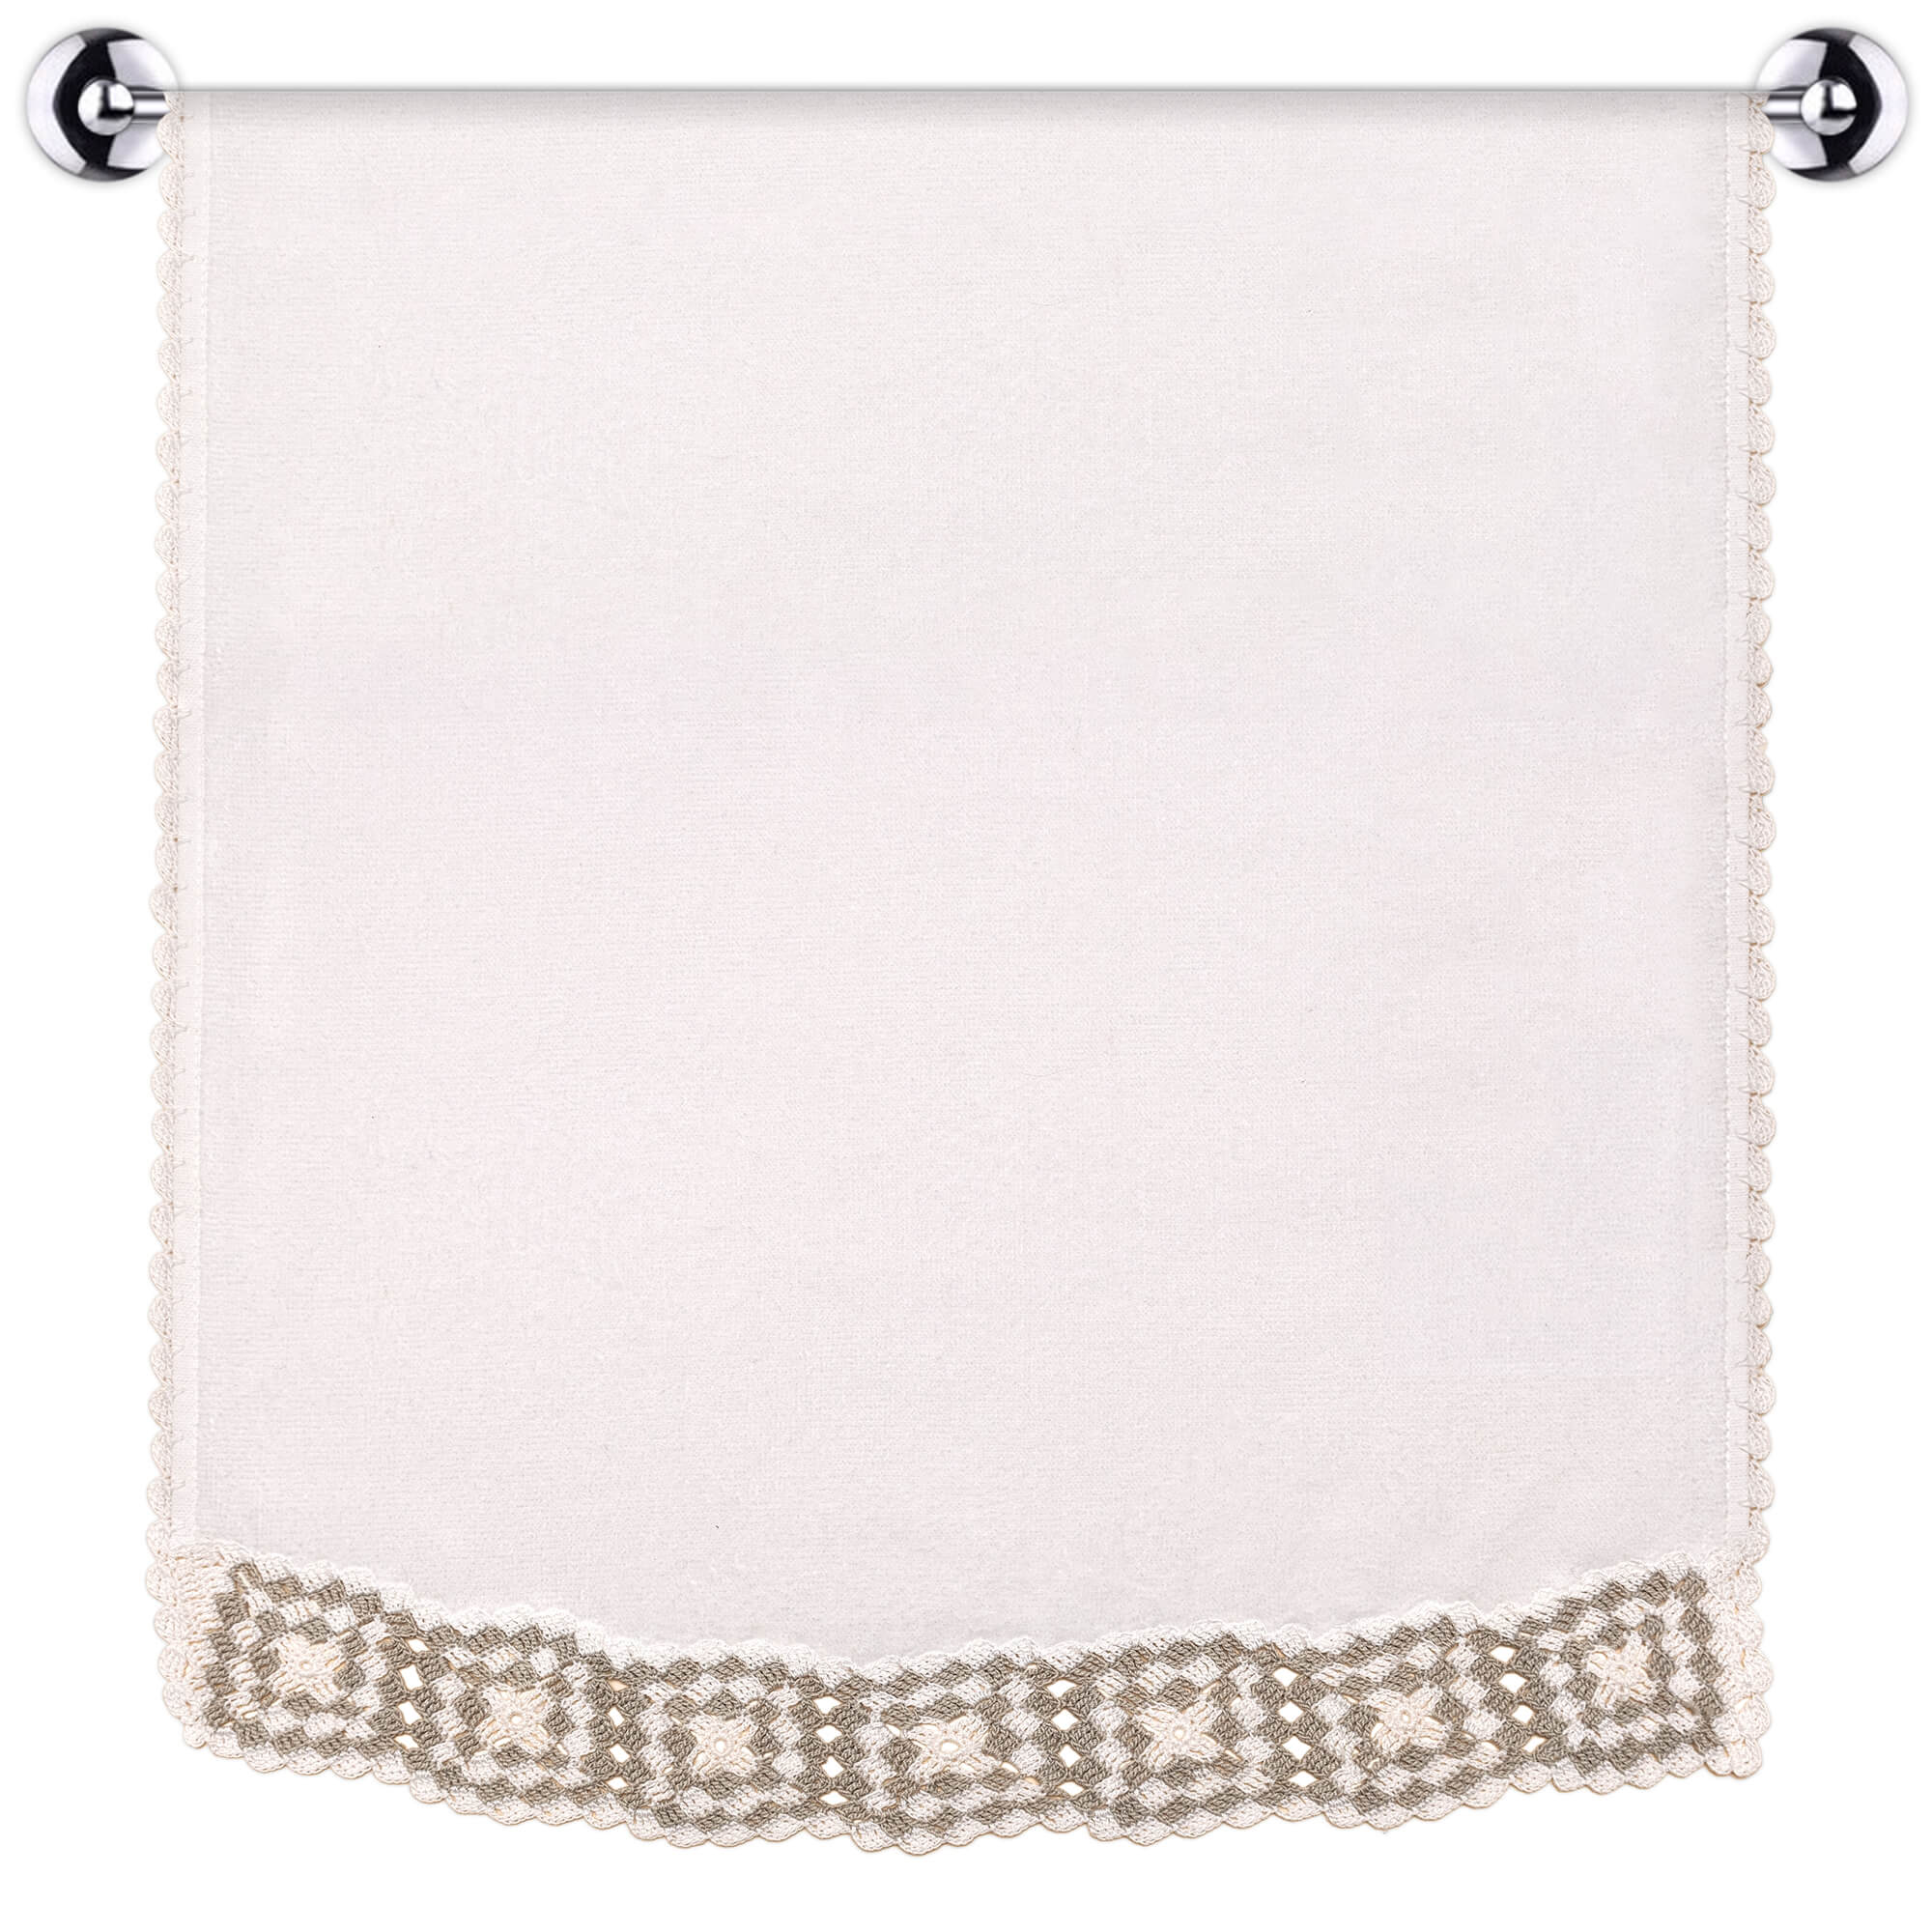 https://valeryaccessory.com/wp-content/uploads/2022/04/Hand-Towel-With-Checkered-Motif-Crochet-and-Edge-Work-Main-Image.jpg